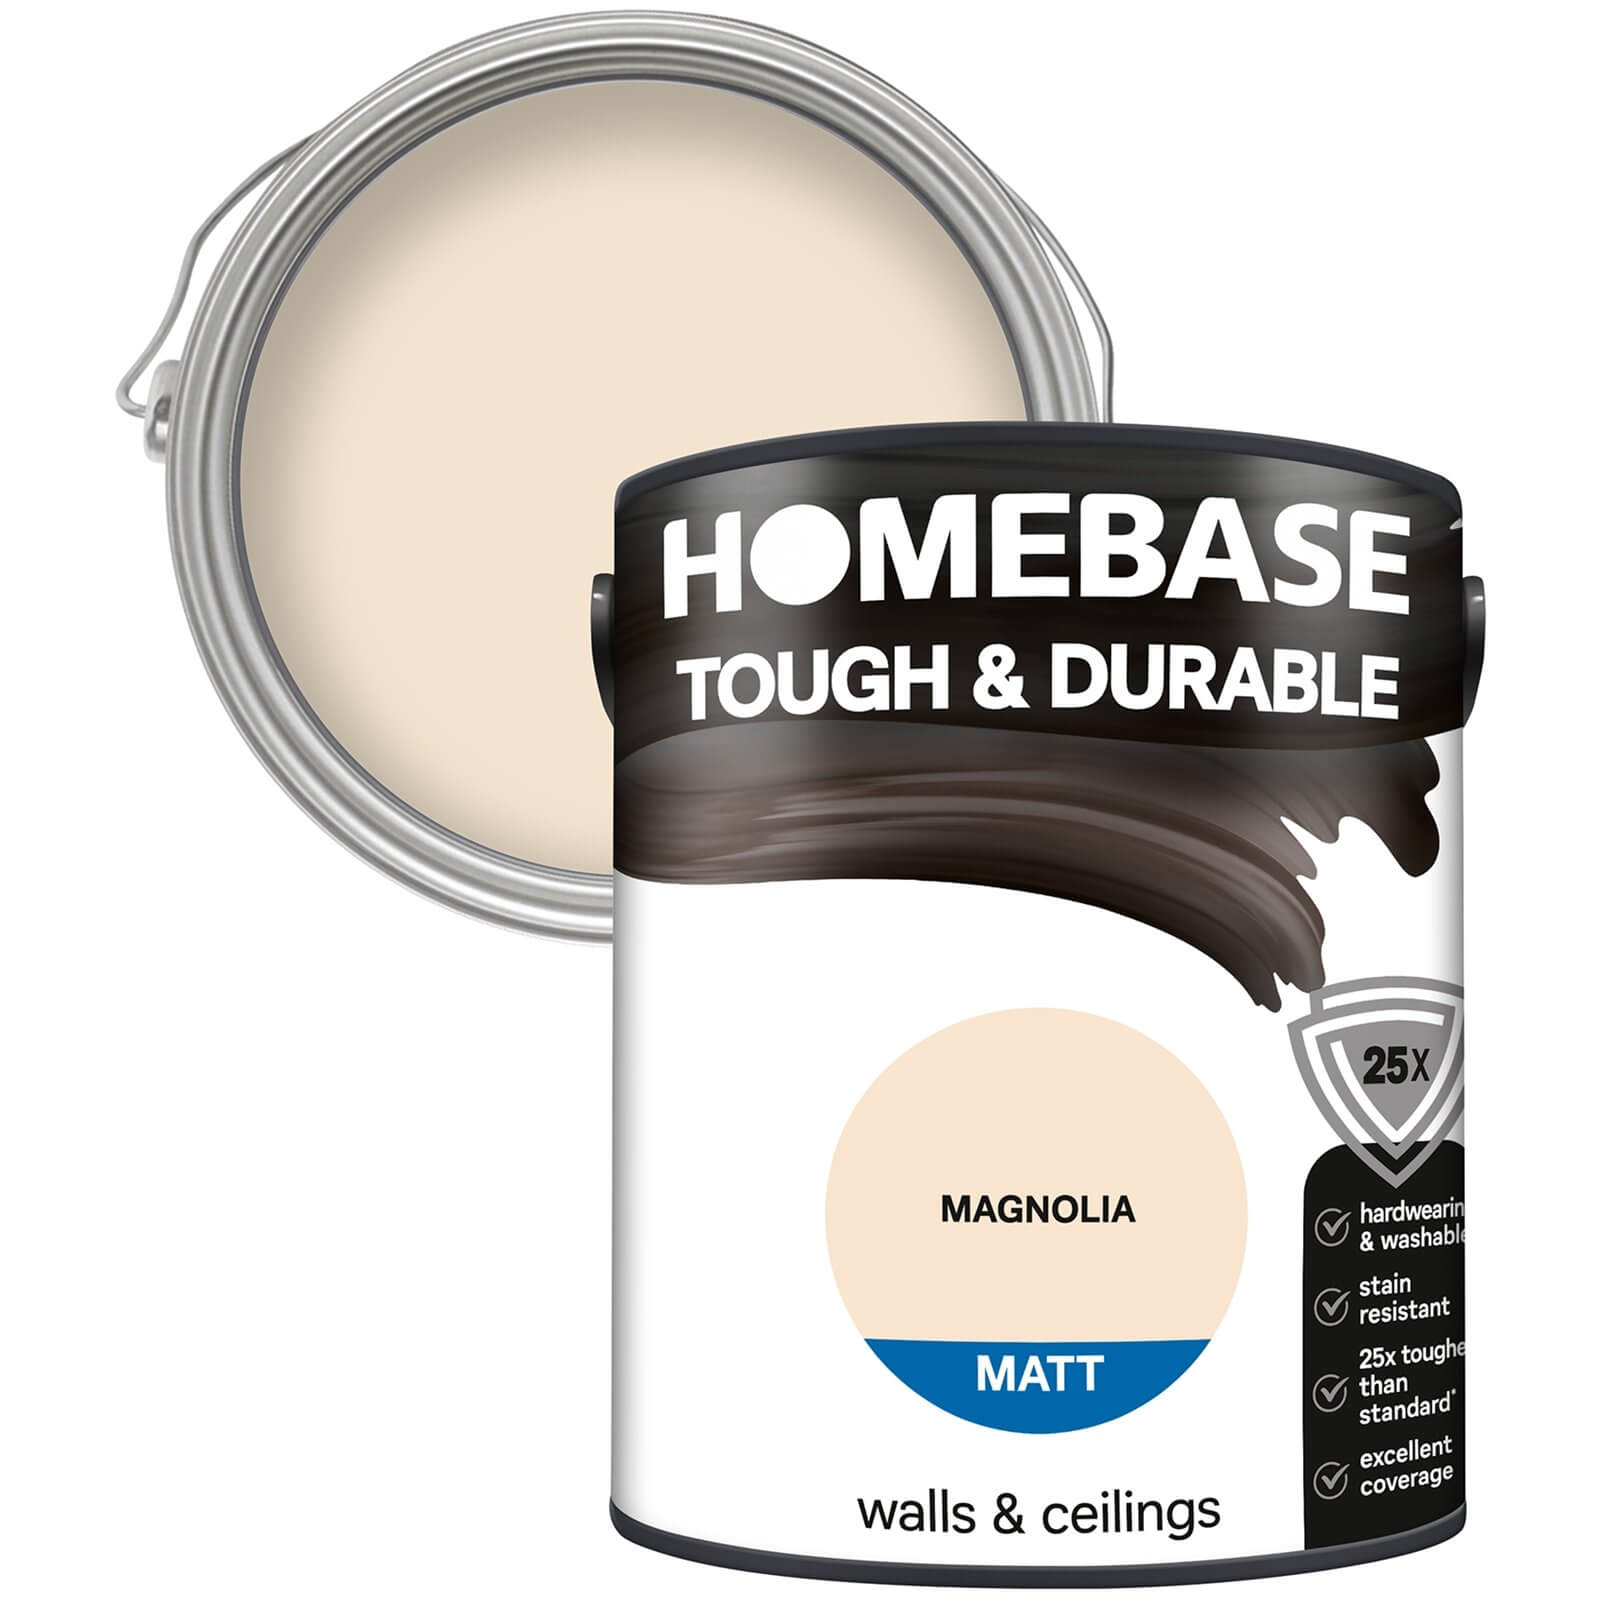 Homebase Tough & Durable Matt Paint Magnolia - 5L